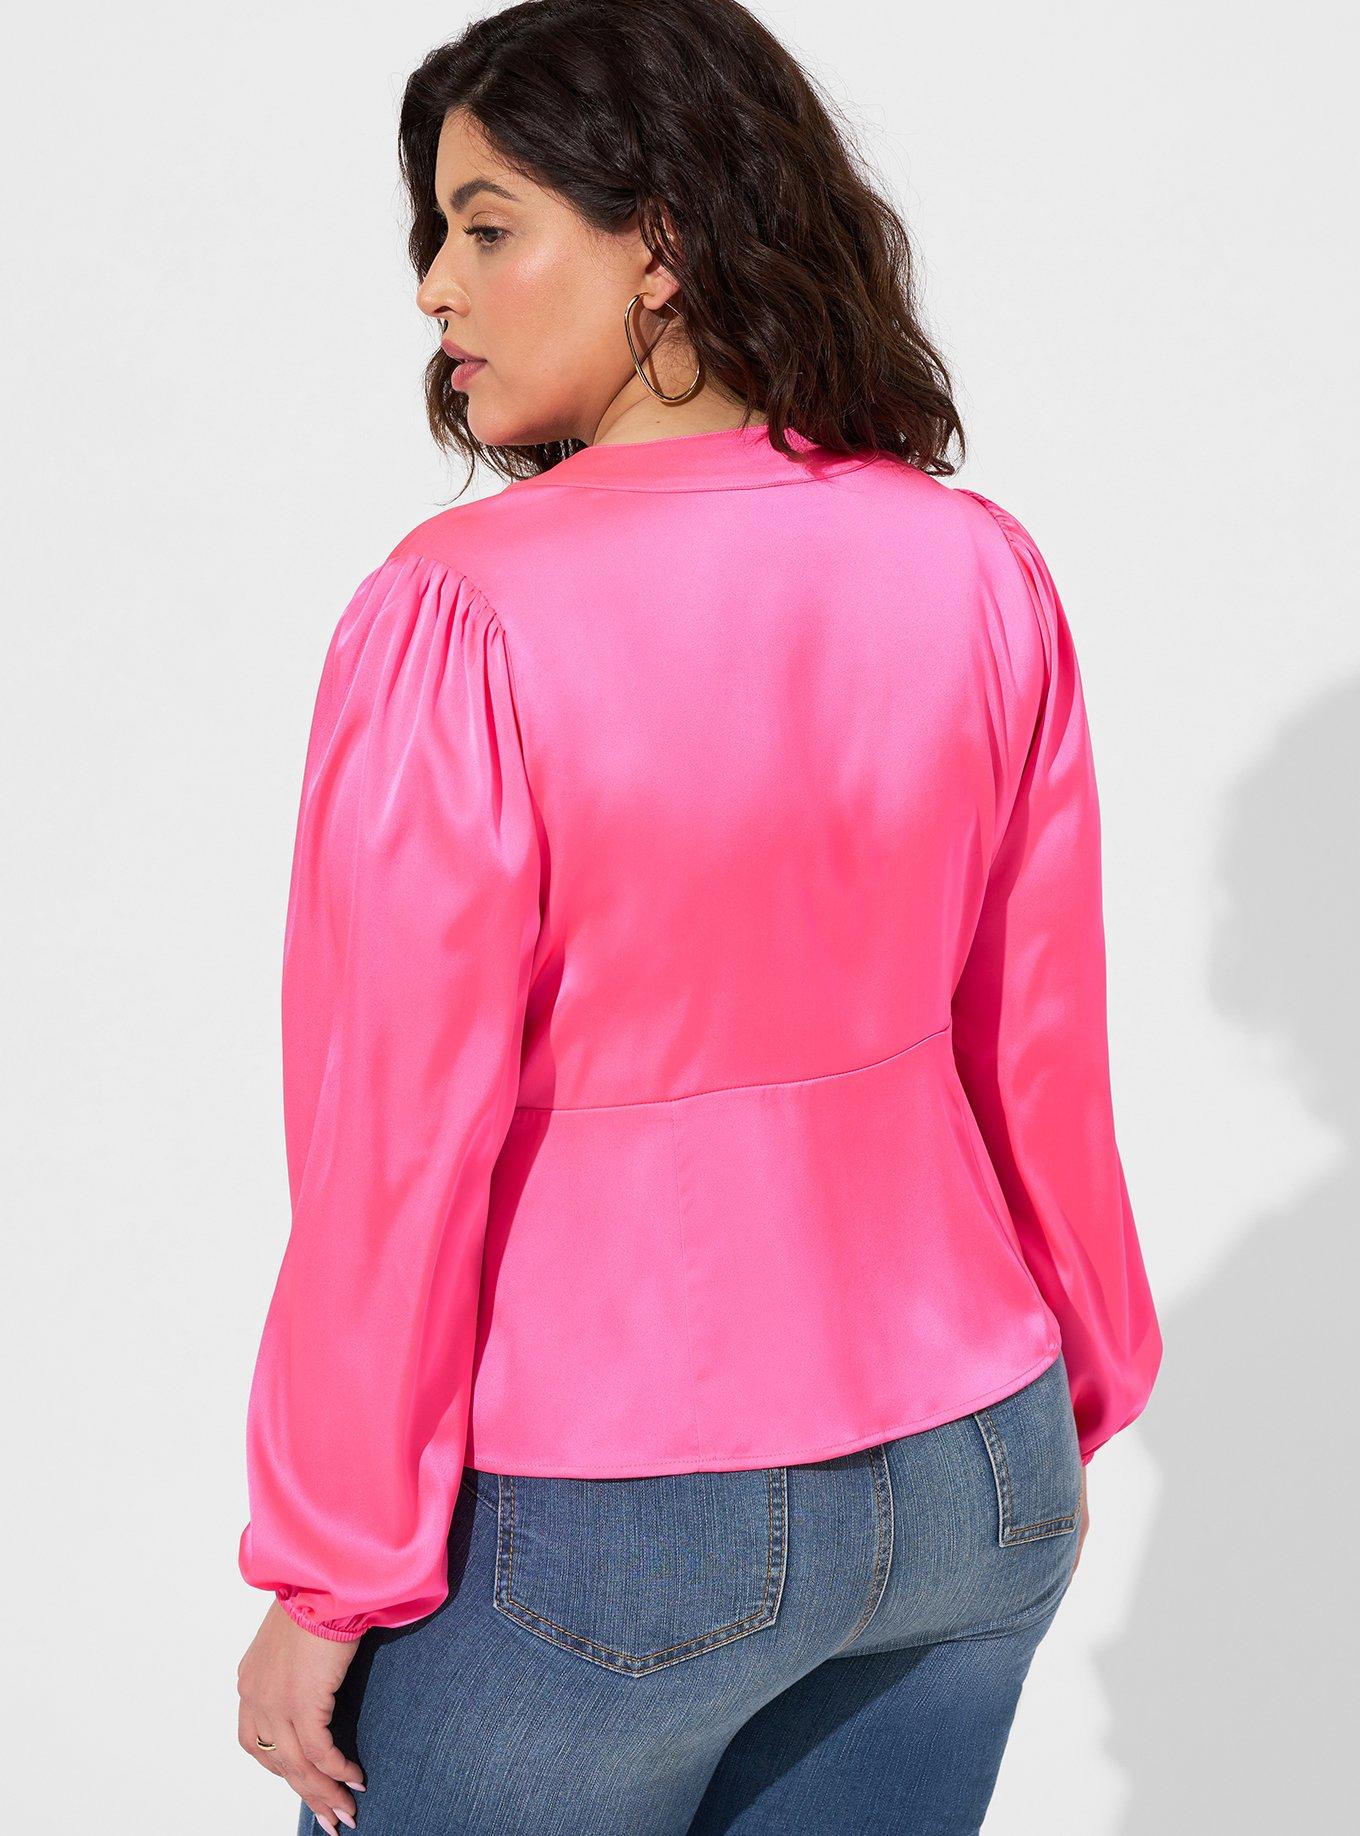 Pink Silk Plus Size Blouse